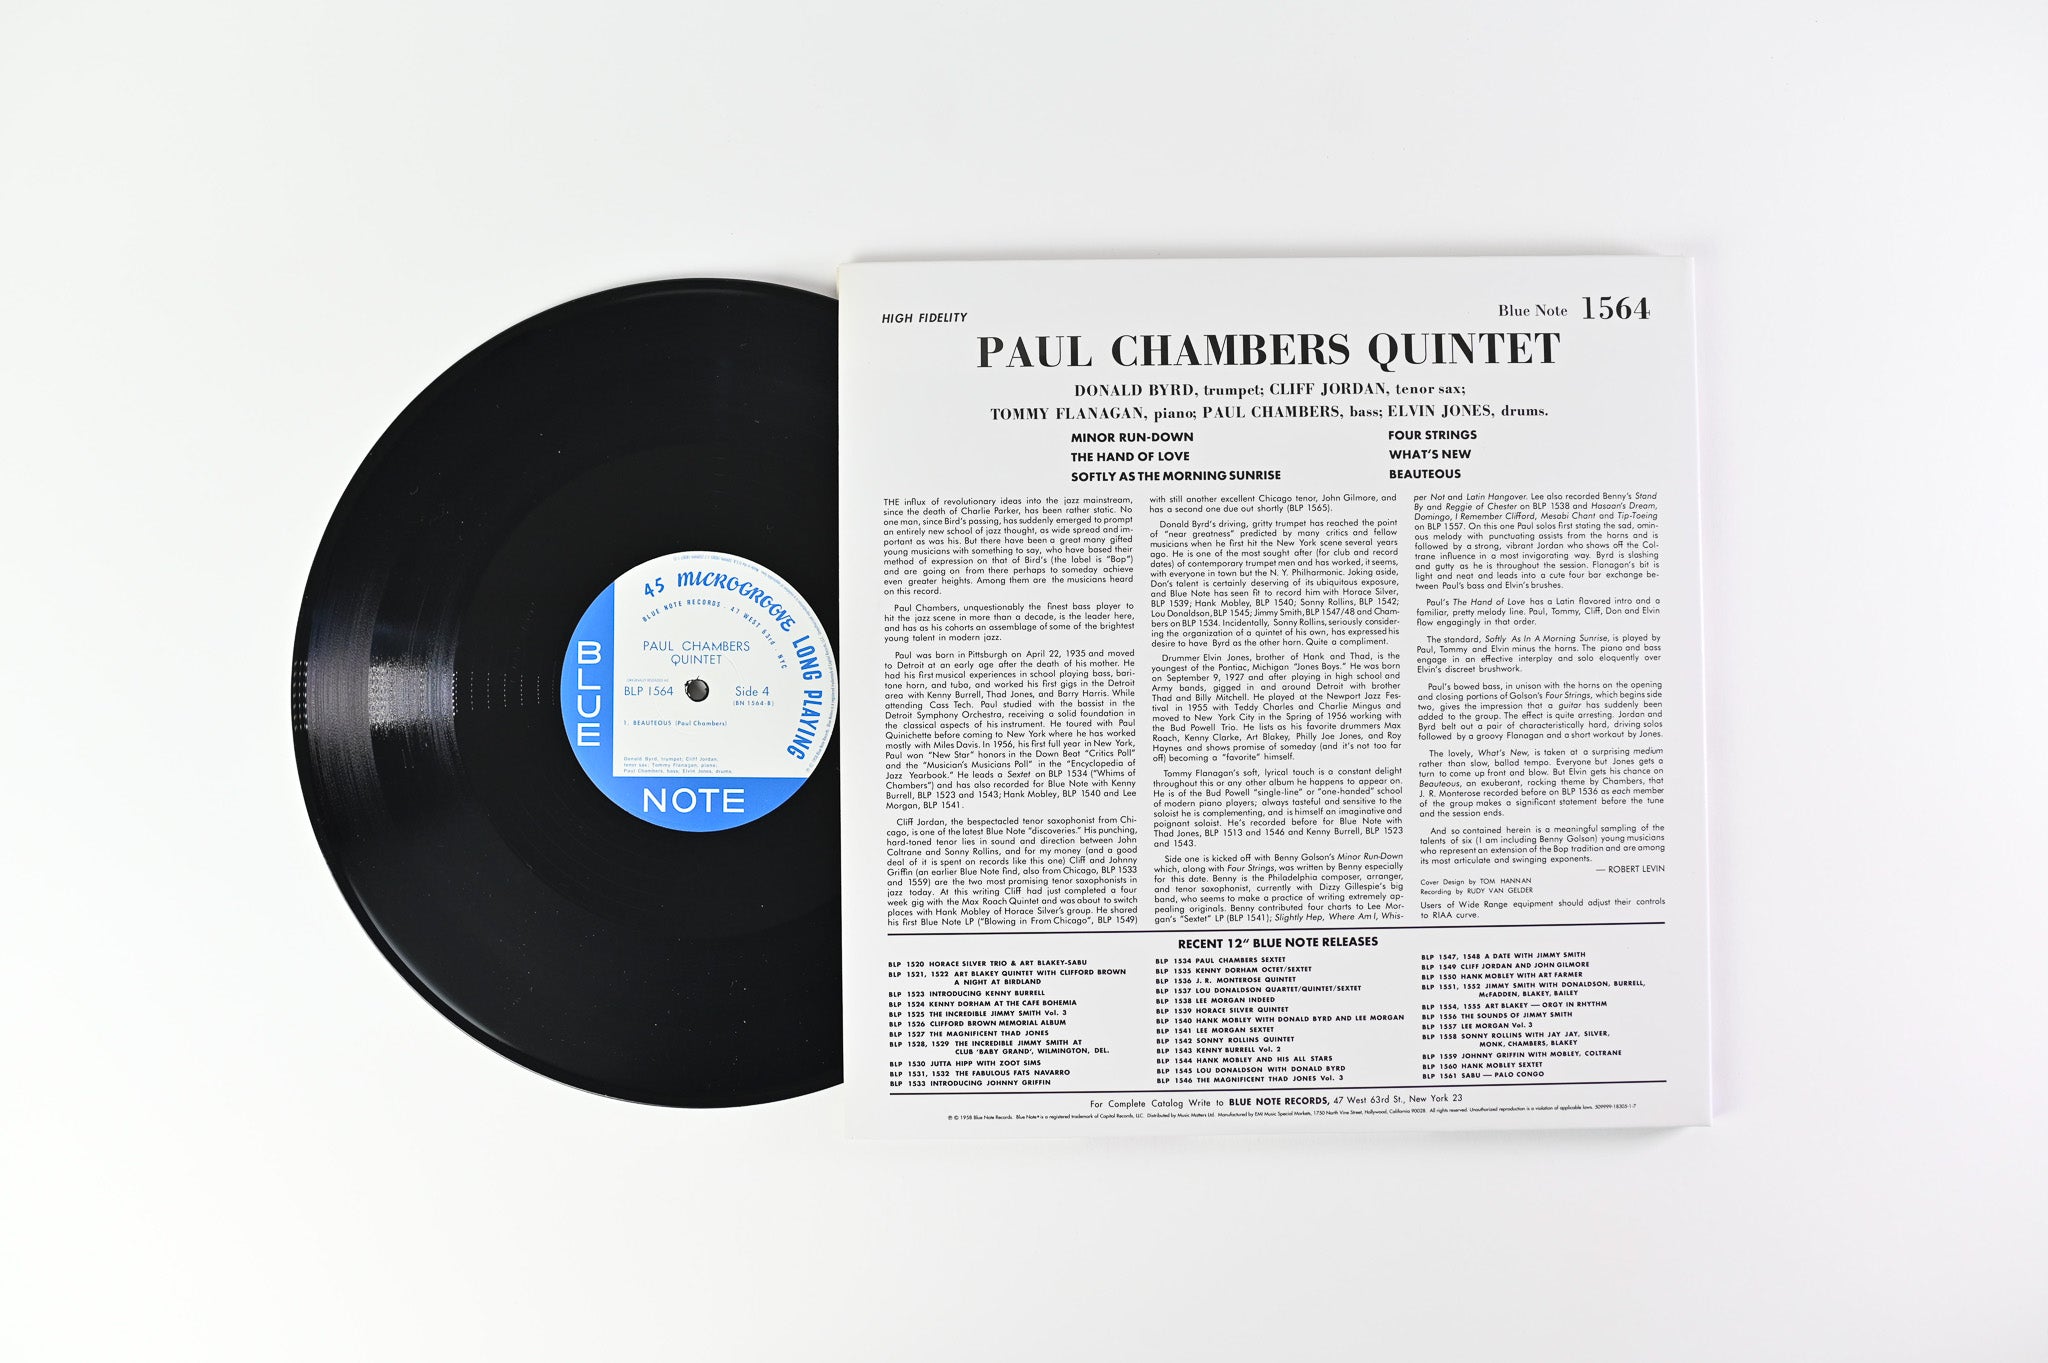 Paul Chambers Quintet - Paul Chambers Quintet on Blue Note Music Matters Ltd Reissue 45 RPM